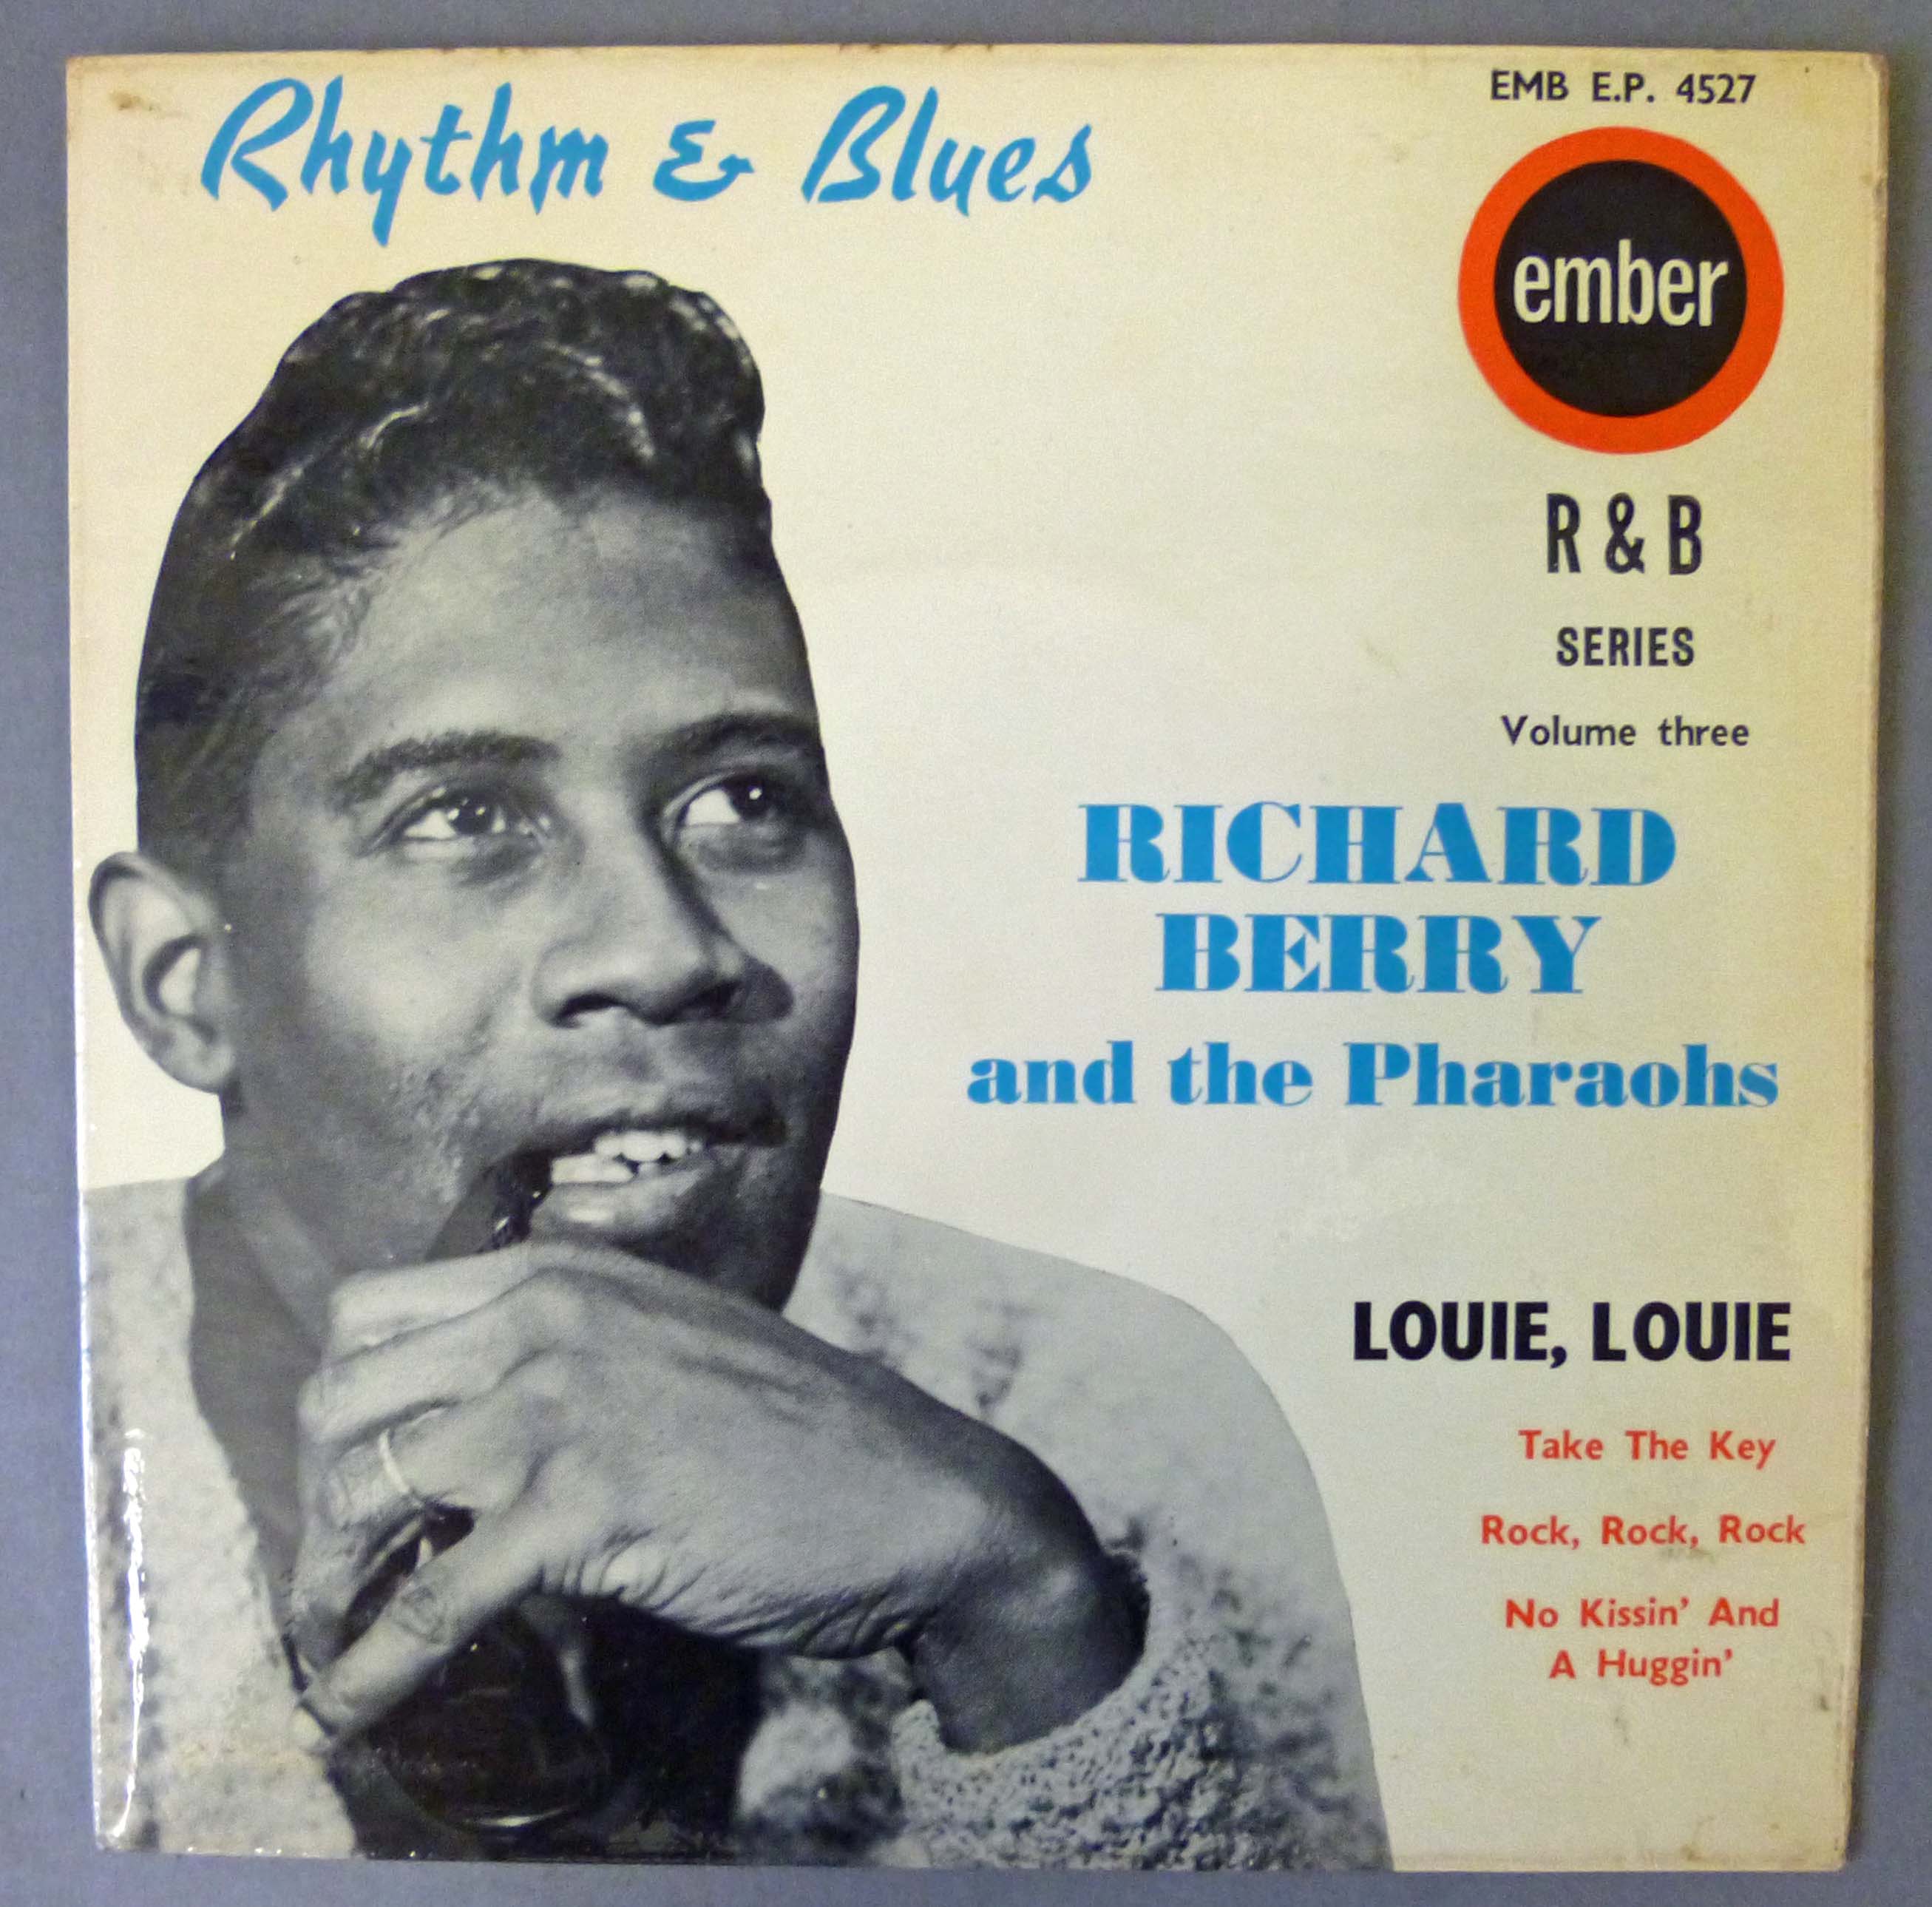 Richard Berry & The Pharaohs 1964 EP 'Rhythm & Blues Vol. 3' Ember label (EMB EP 4527) (illustrated)